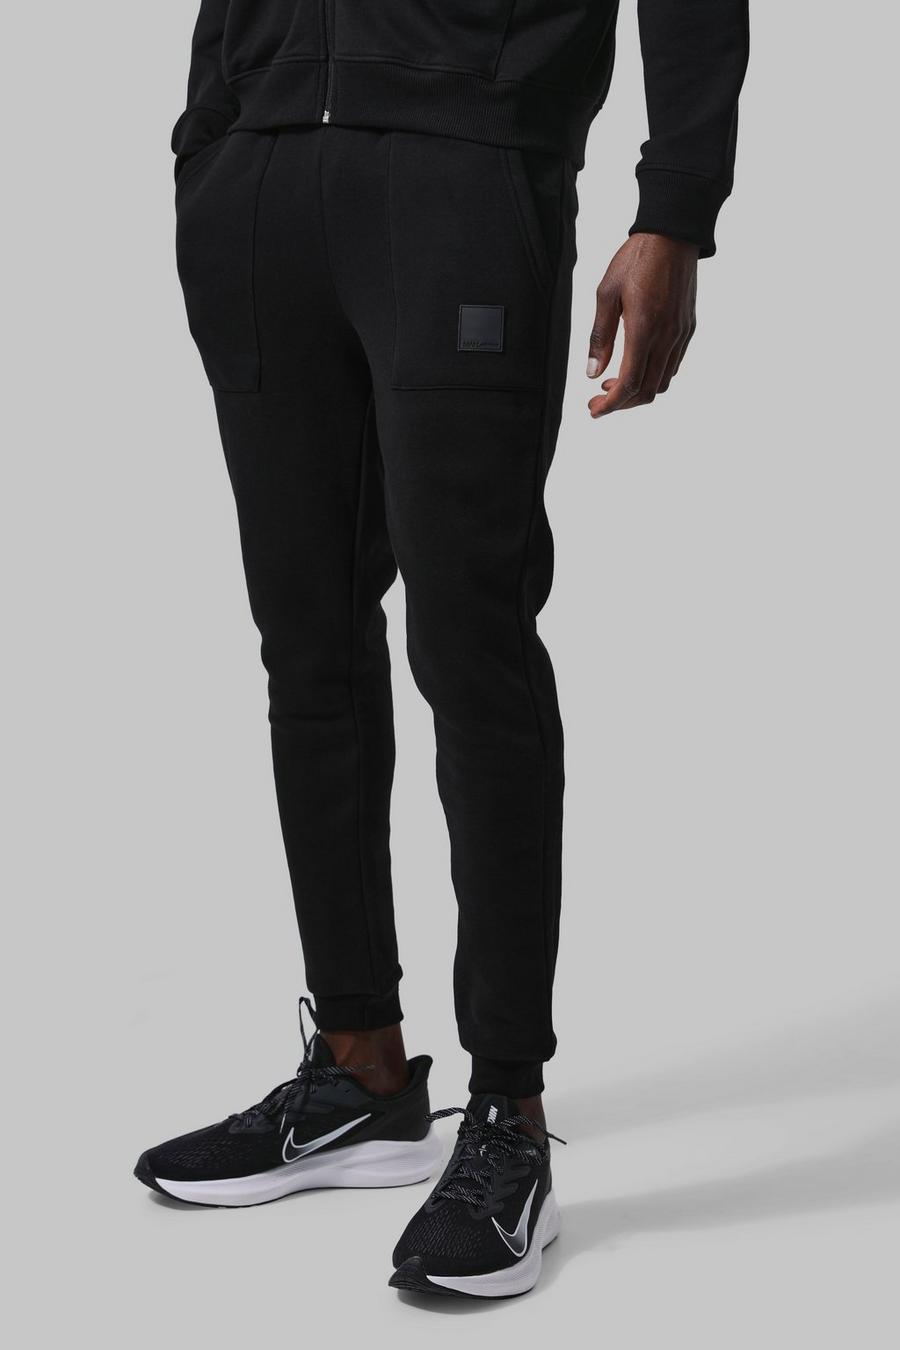 Pantaloni tuta Man Active Gym con tasche, Black nero